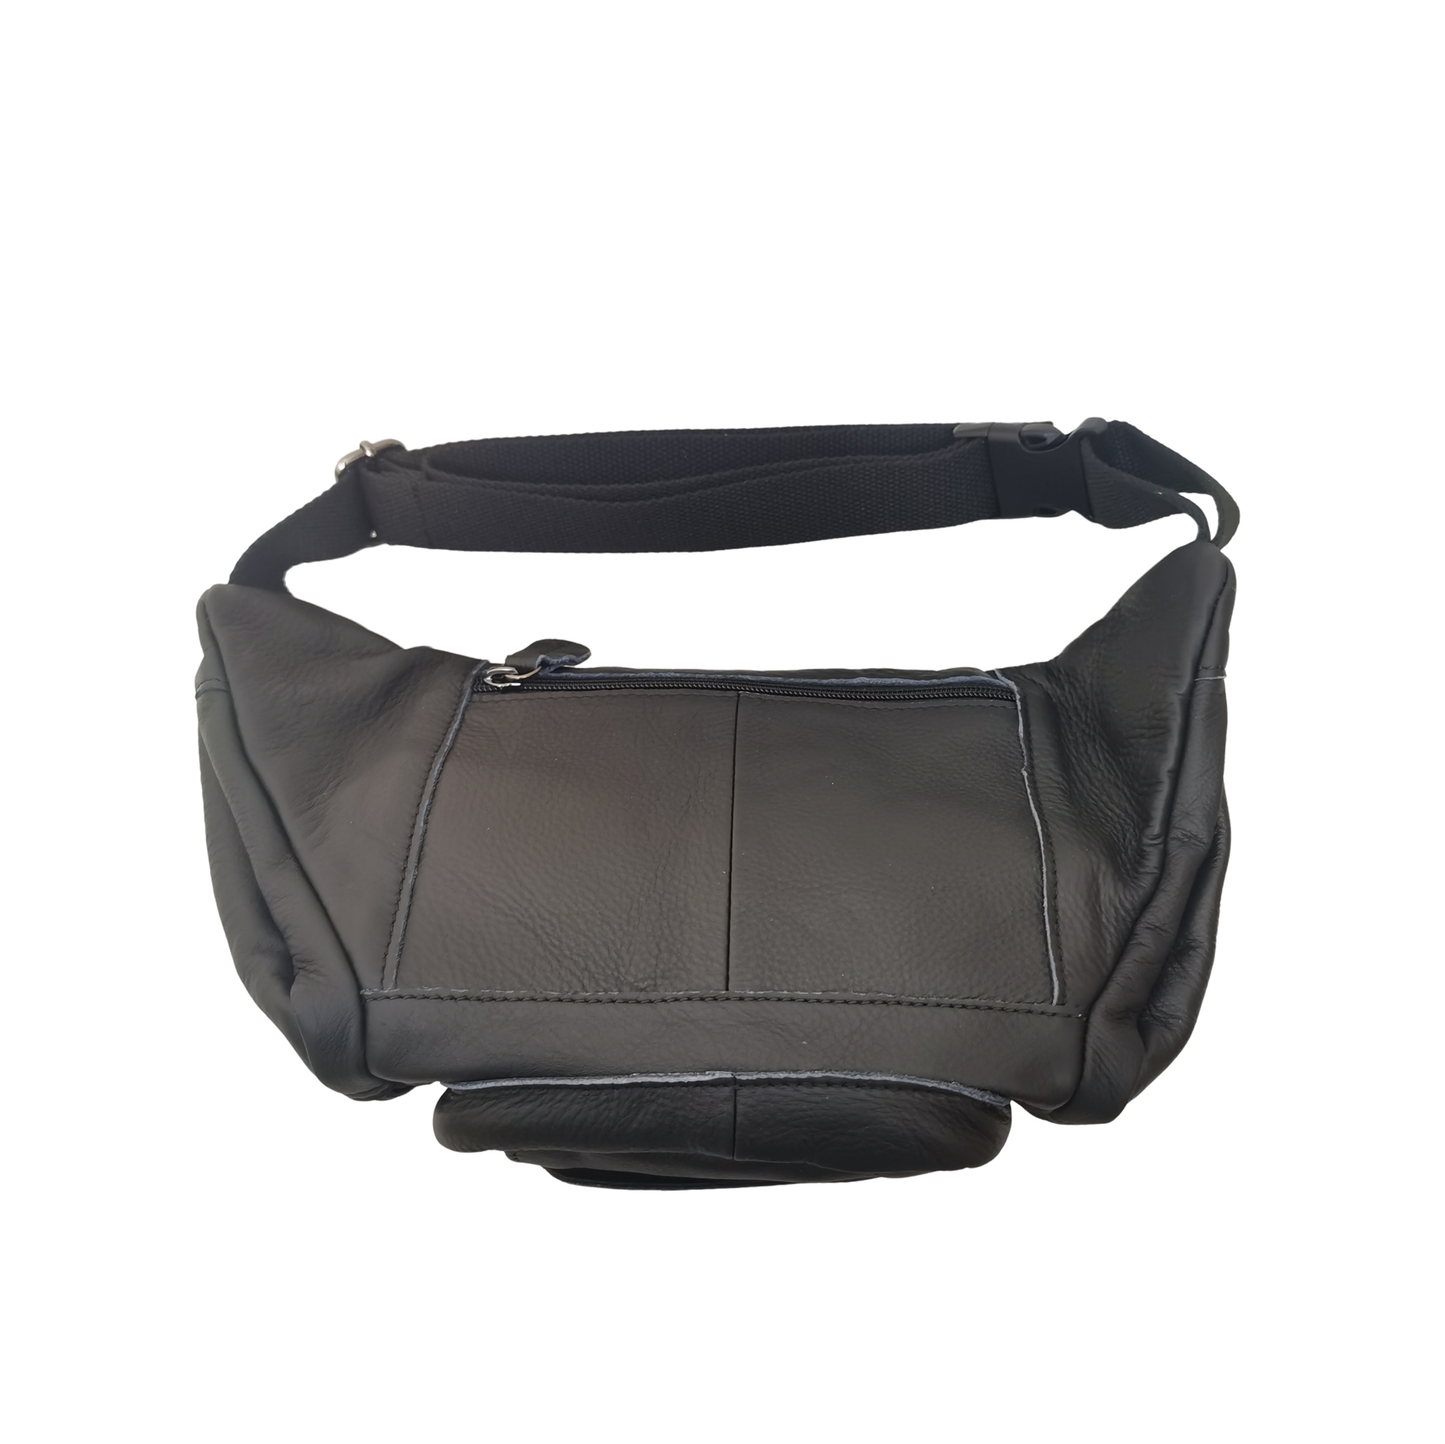 Unisex cowhide leather handbag Vesny pouch design waist bag